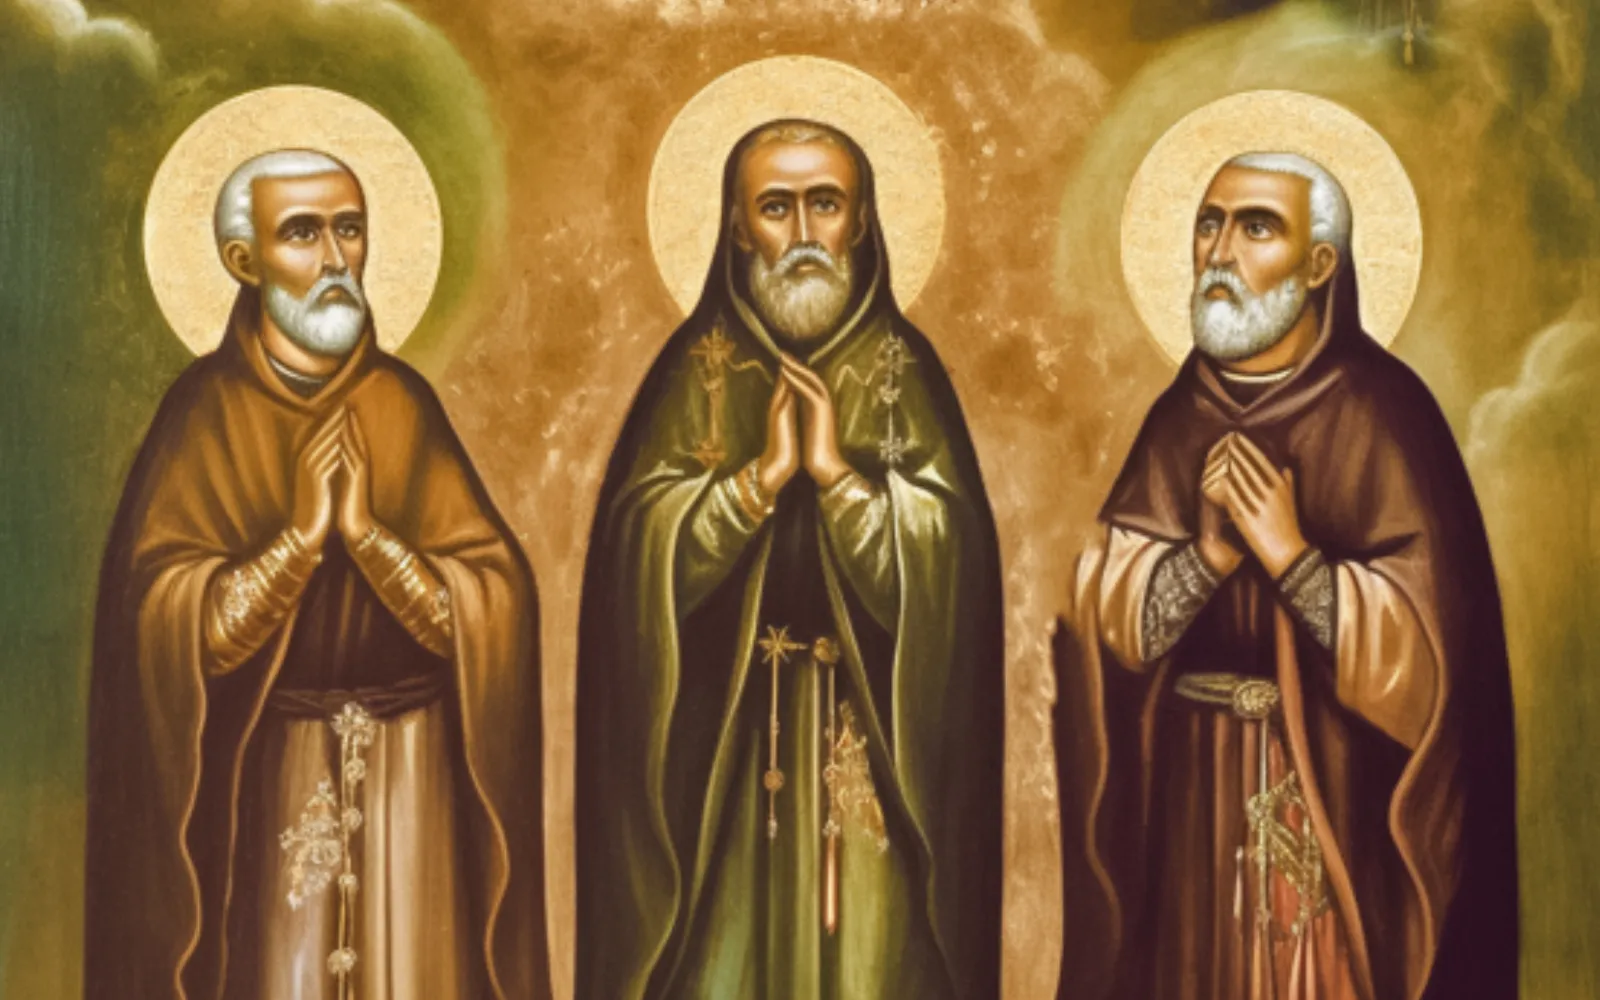 Los hermanos Massabki, mártires de Damasco próximos a ser canonizados?w=200&h=150